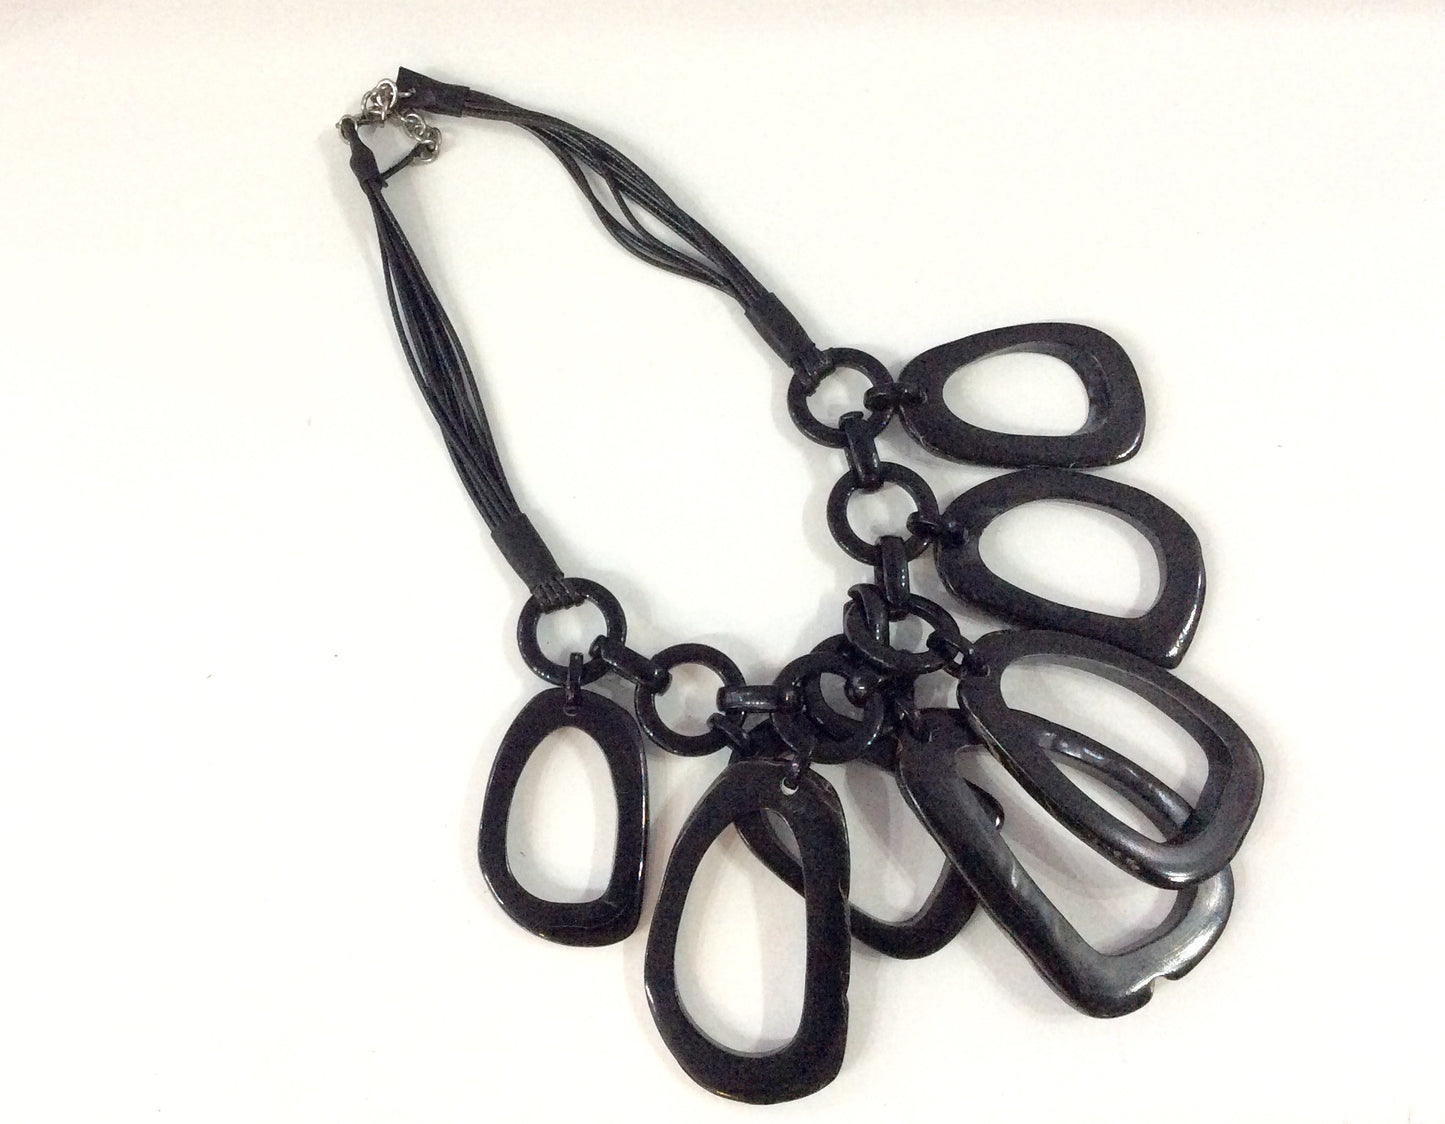 Necklace-Multi-Strand Black Italian Leather Cord with Acrylic and Bone Beading